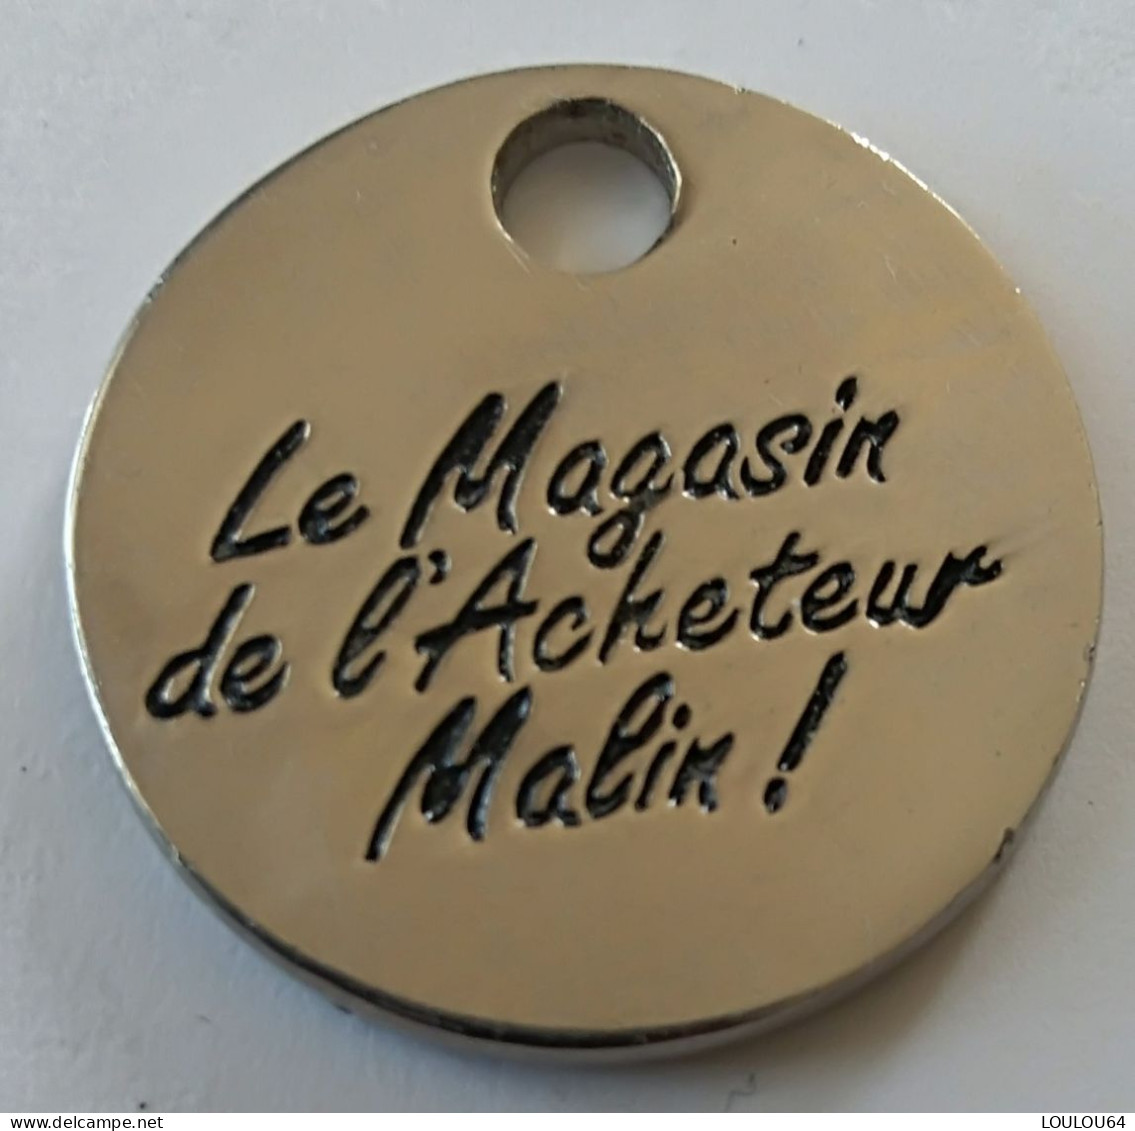 Jeton De Caddie - MDA - ELECTROMENAGER - Le Magasin De L'Acheteur Malin ! - En Métal - (1) - - Trolley Token/Shopping Trolley Chip